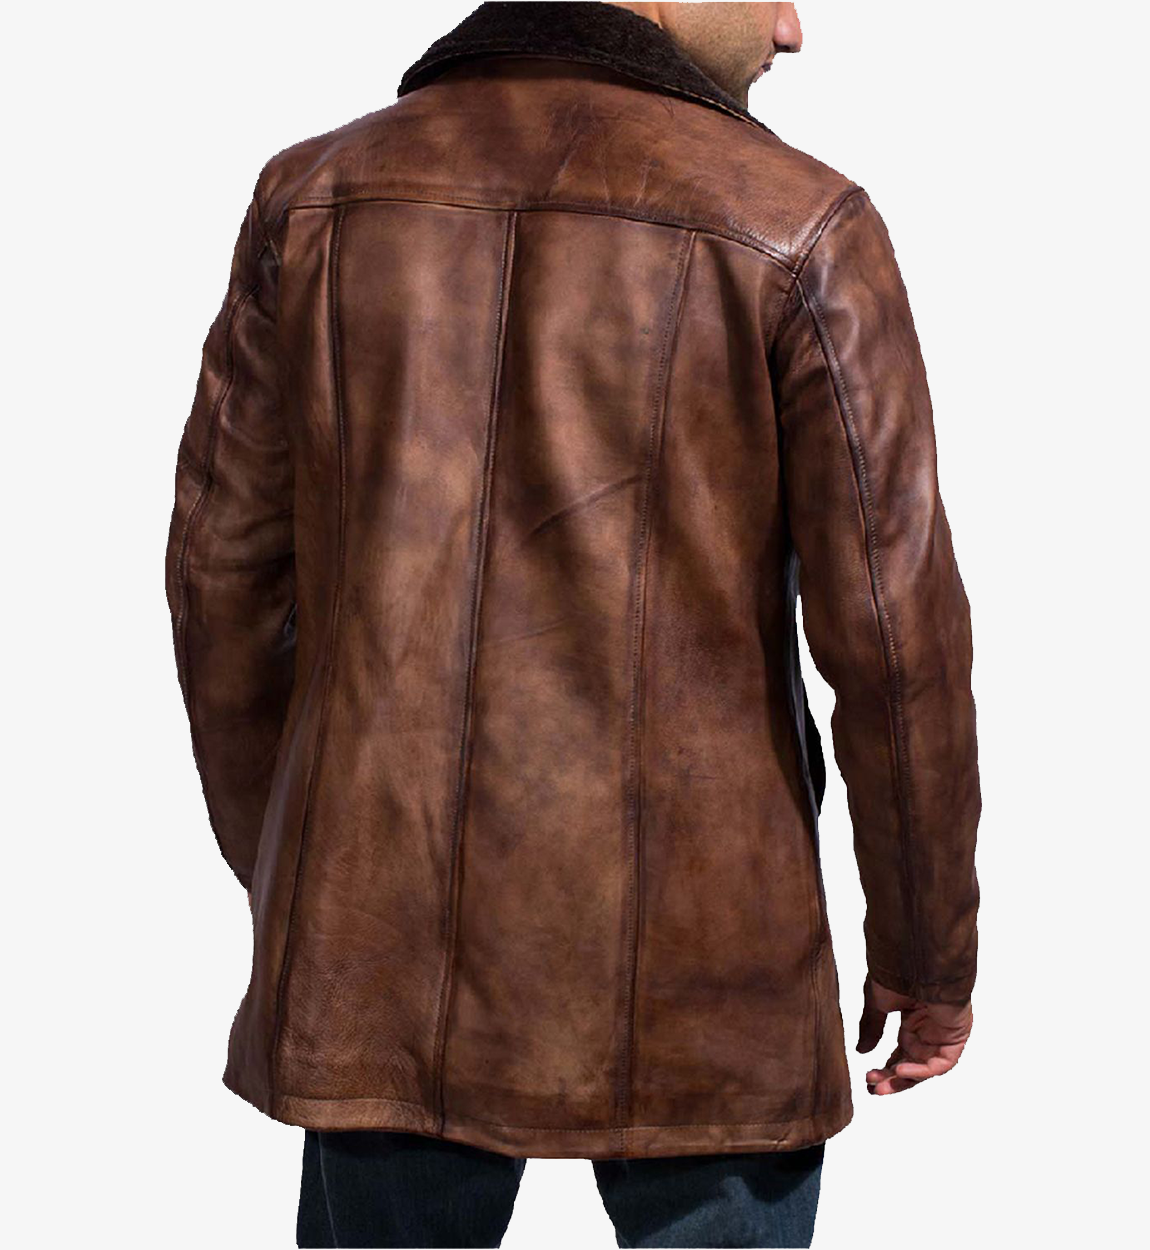 Men's Distressed Genuine Leather Brown Fur Coat